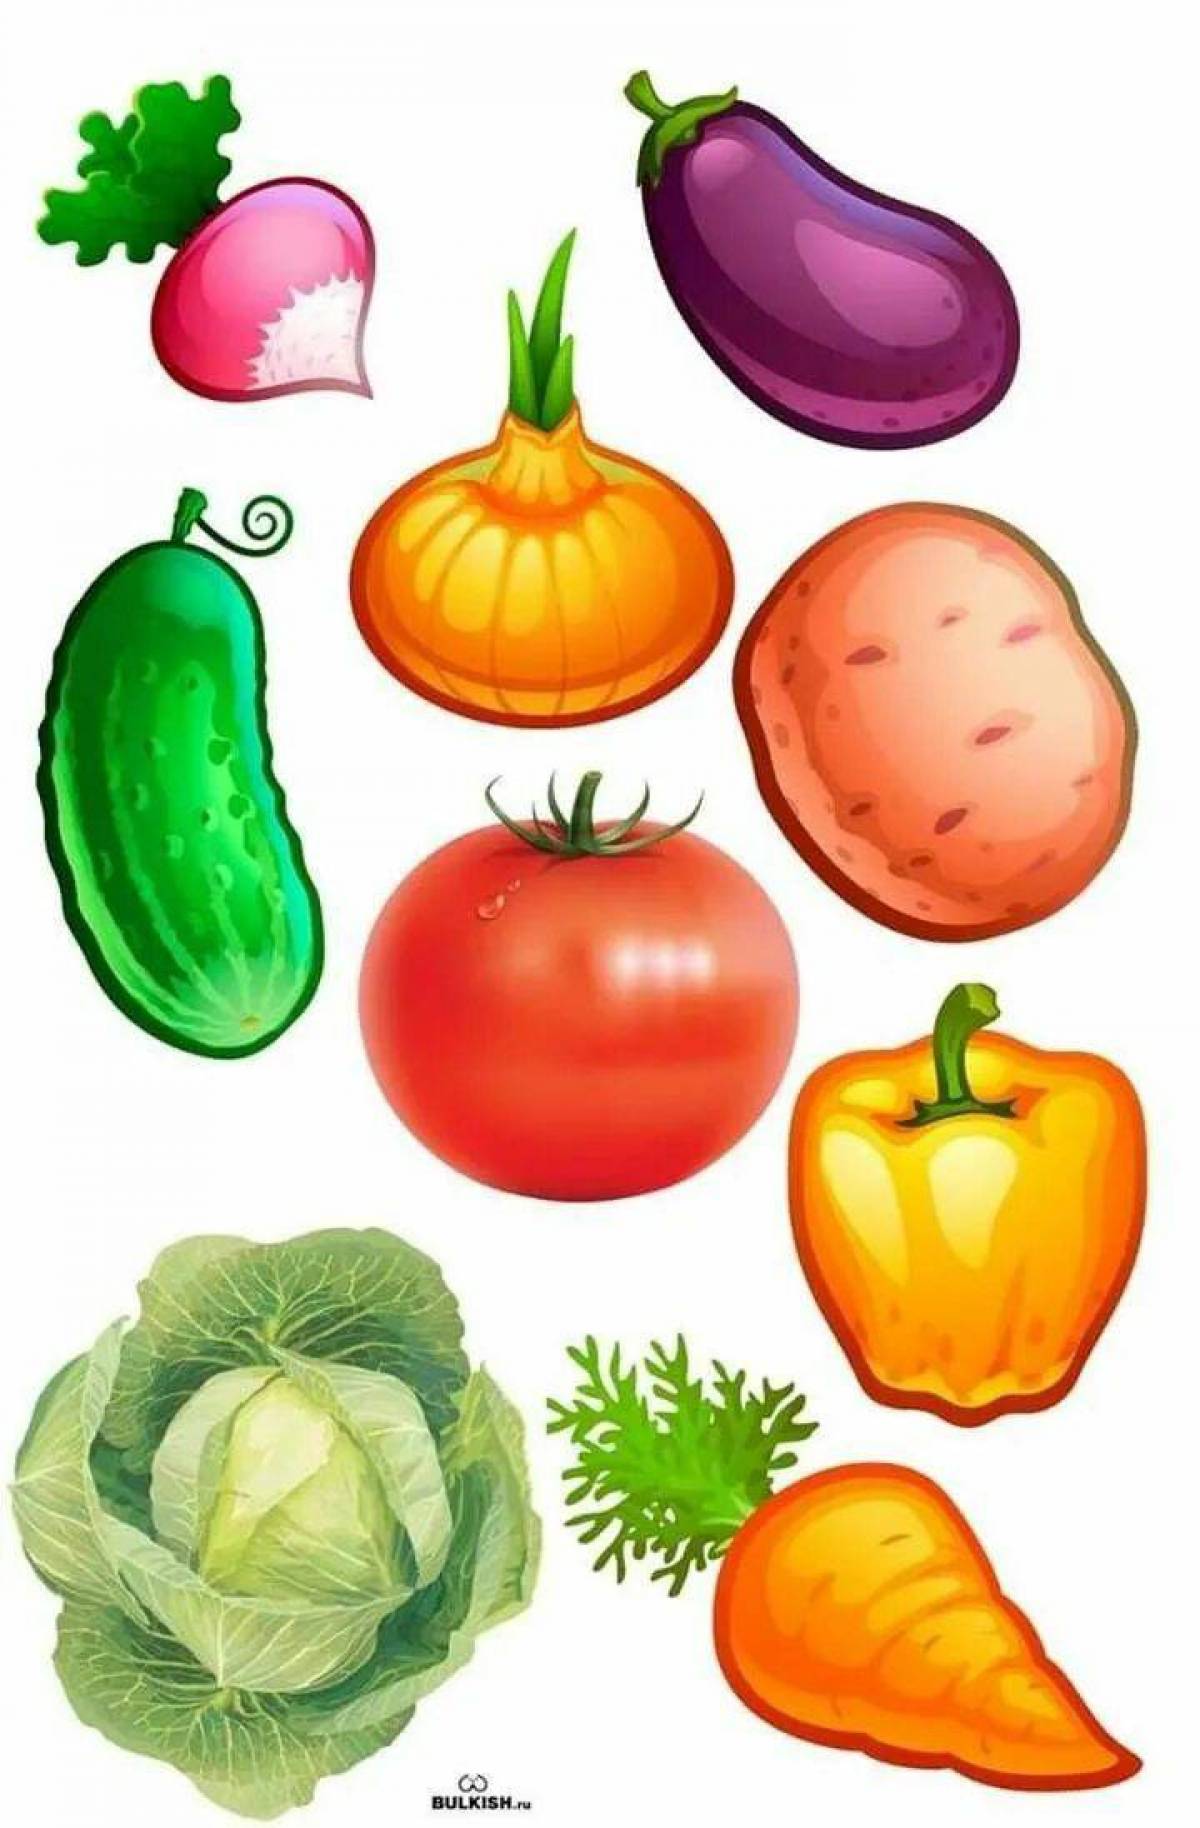 Овощи картинки для детей. Овощи для детей. Овощи и фрукты для детей. Овощи для вырезания. Овощи для дошкольников.